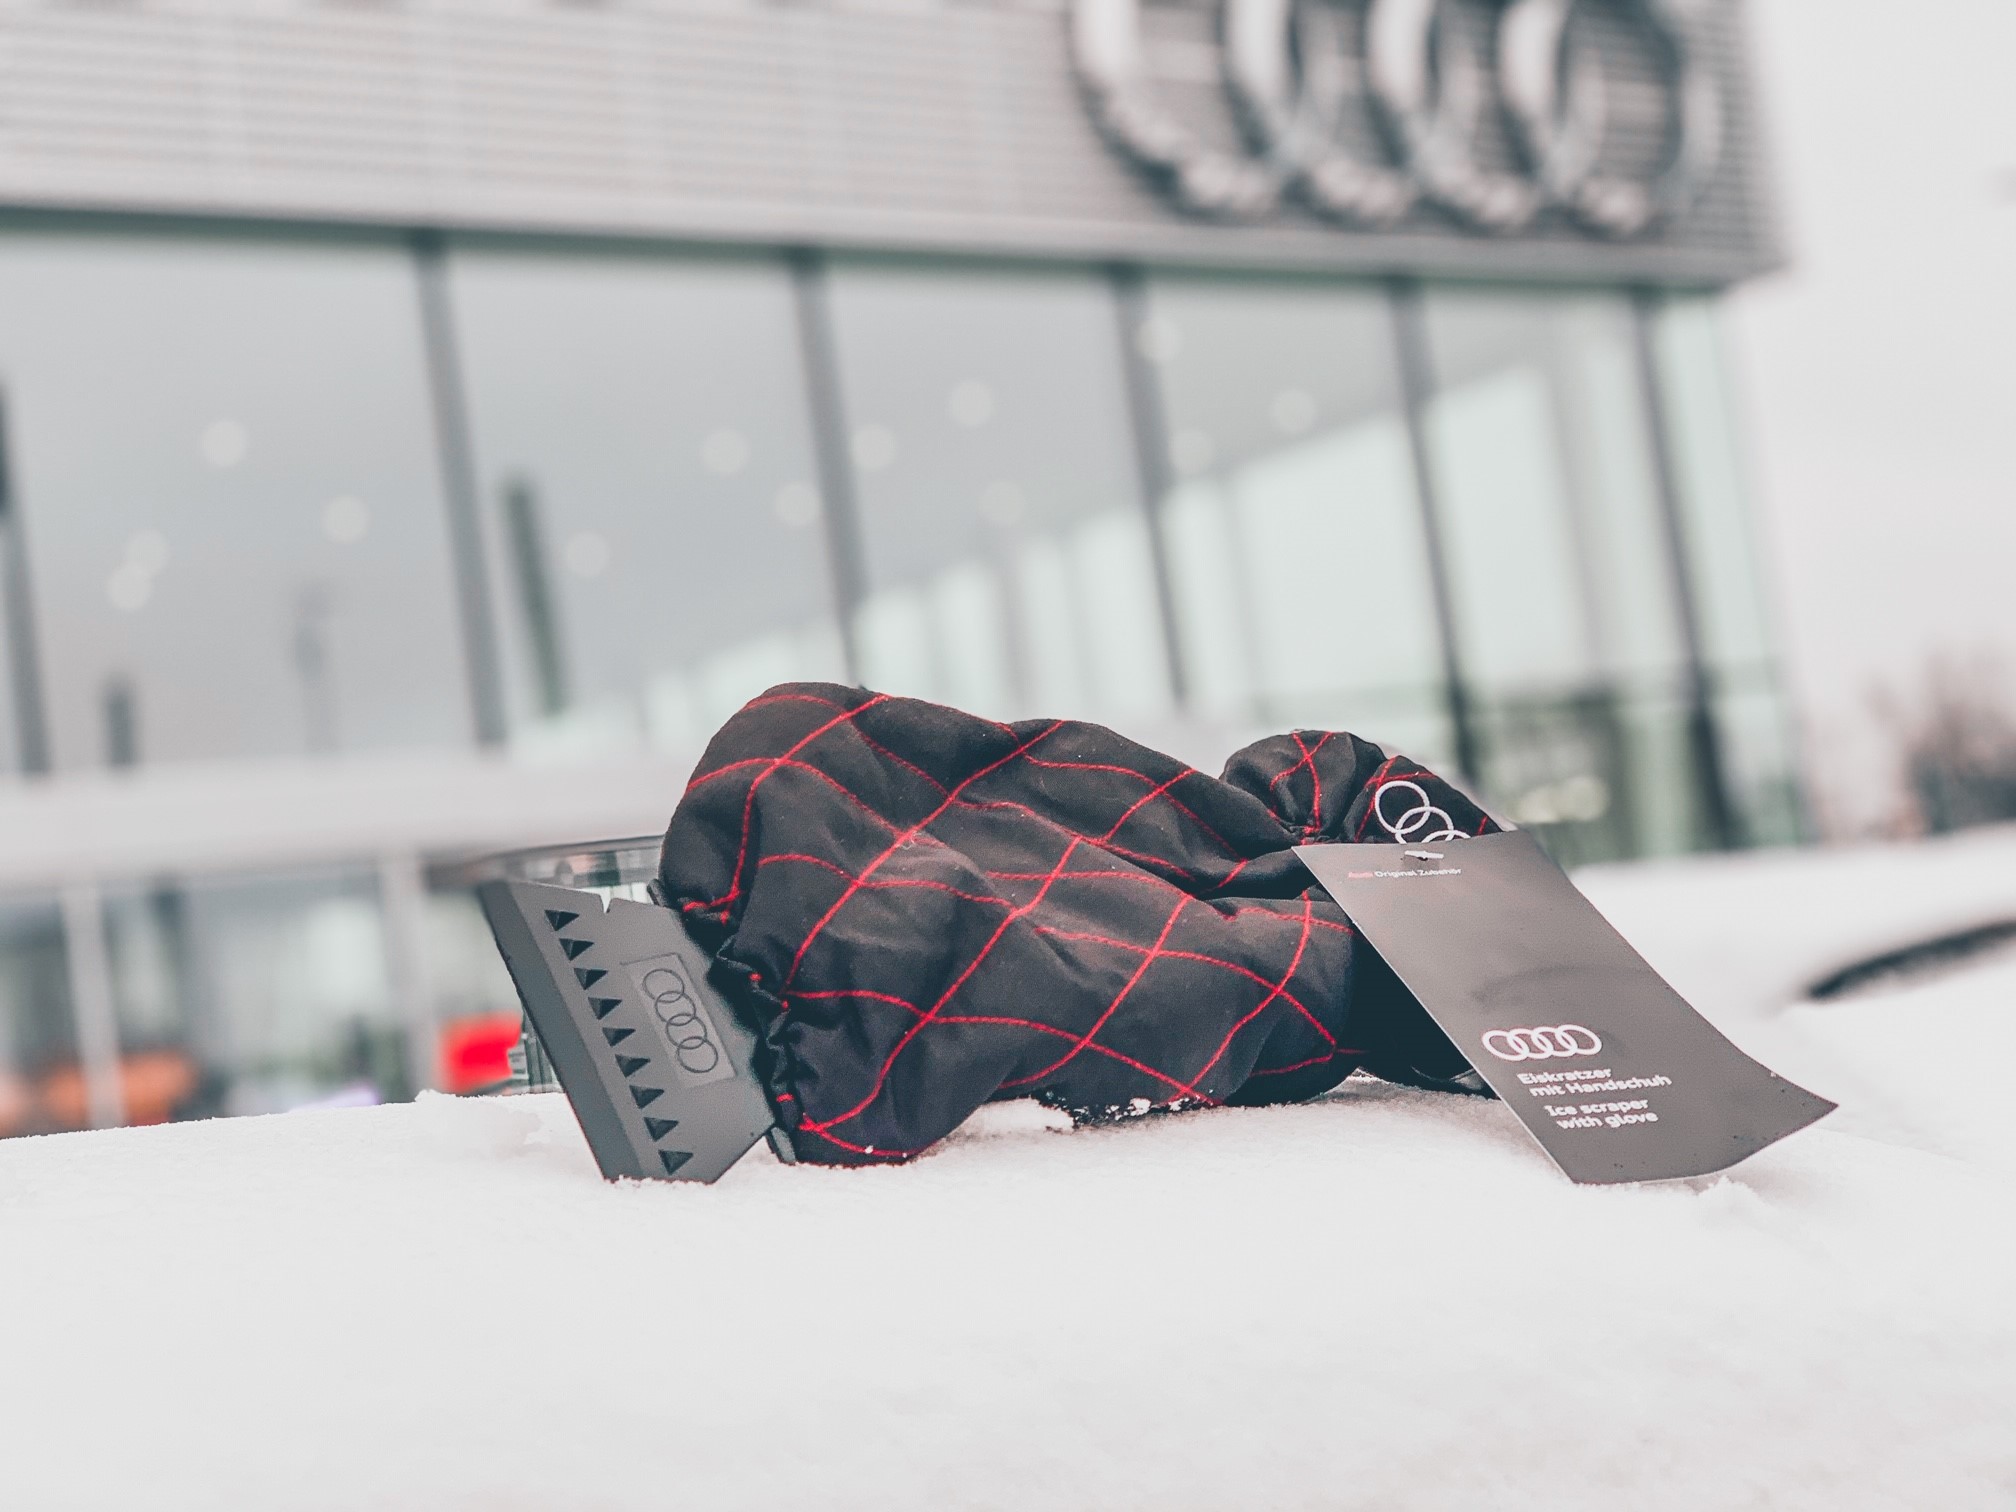 Audi Ice Scraper with Glove - Audi Merchandise